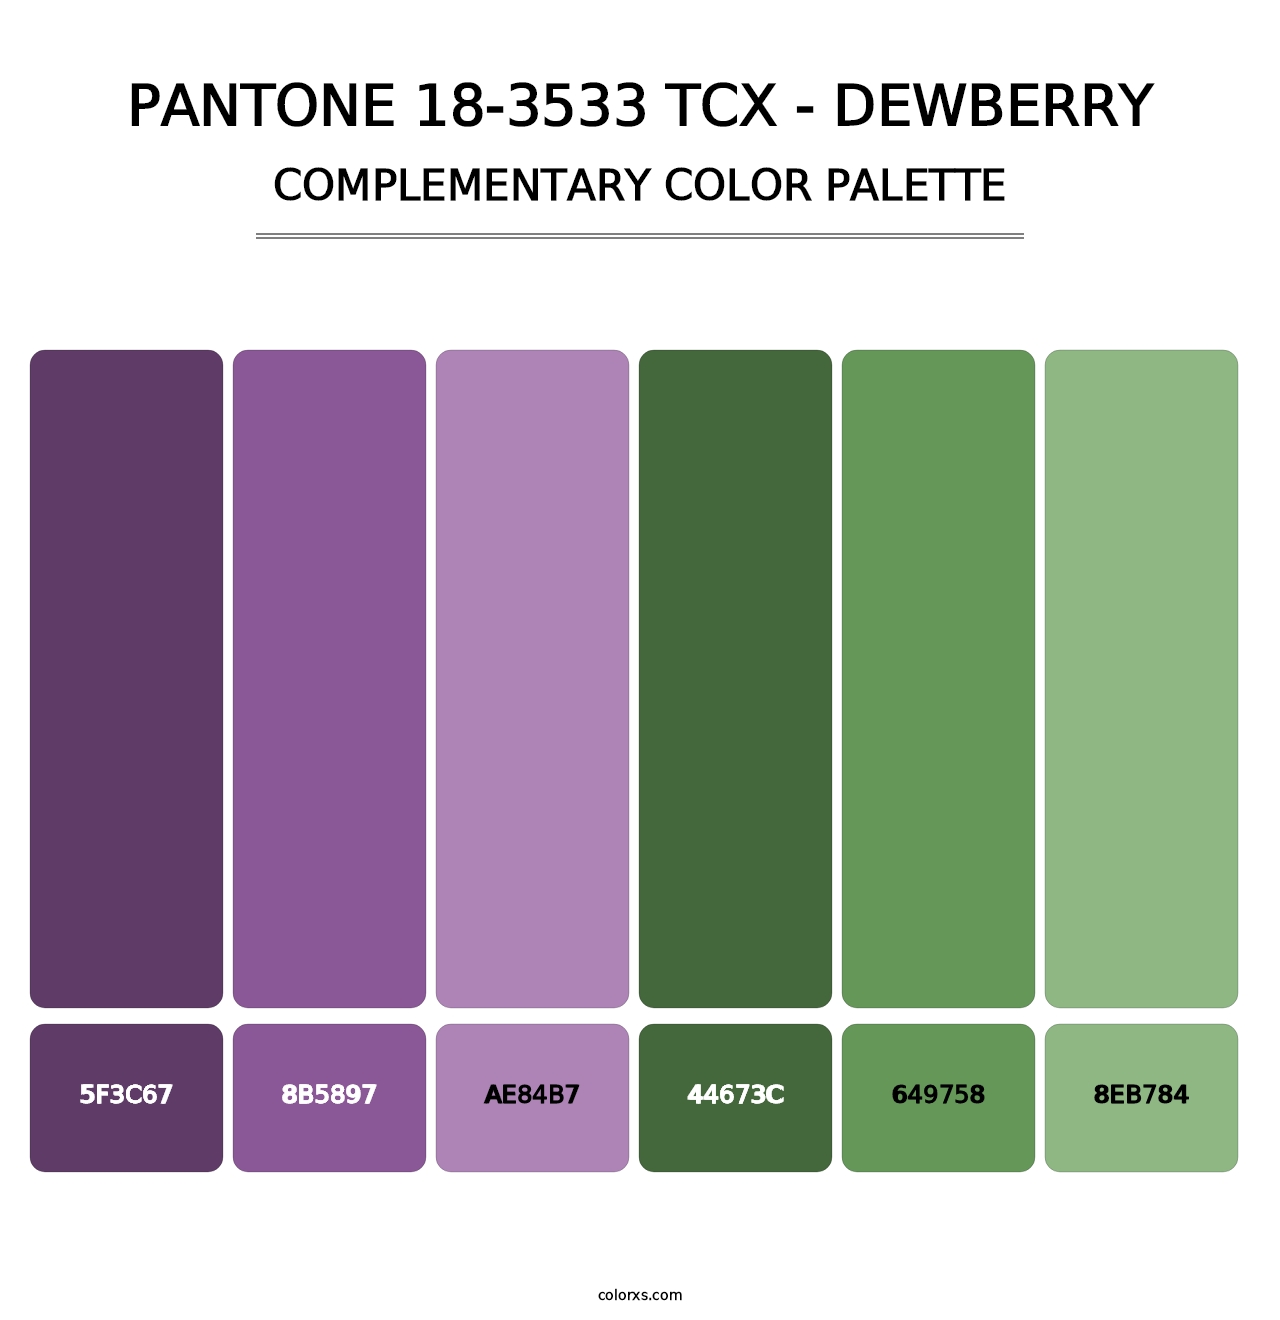 PANTONE 18-3533 TCX - Dewberry - Complementary Color Palette